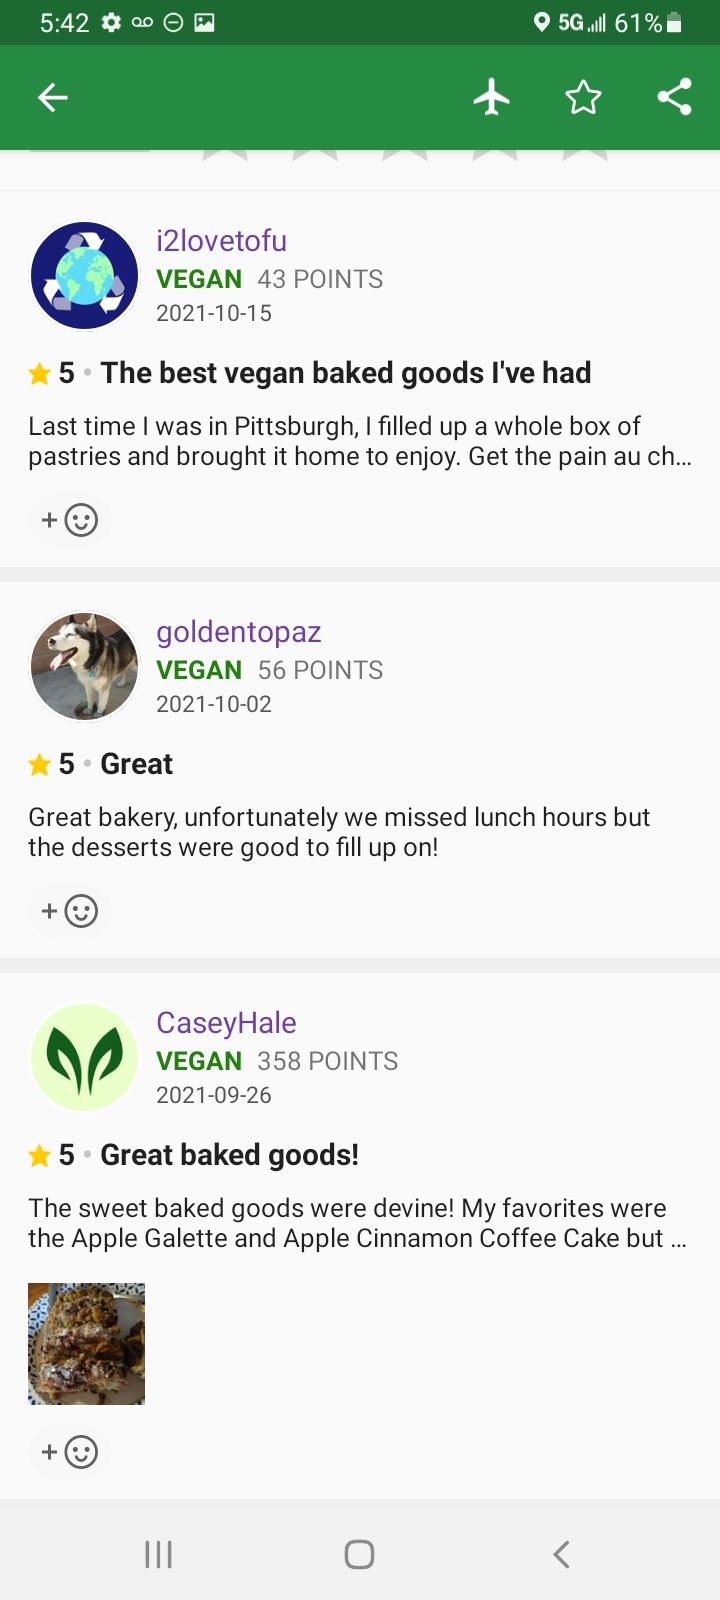 Reviews of vegan food on HappyCow.